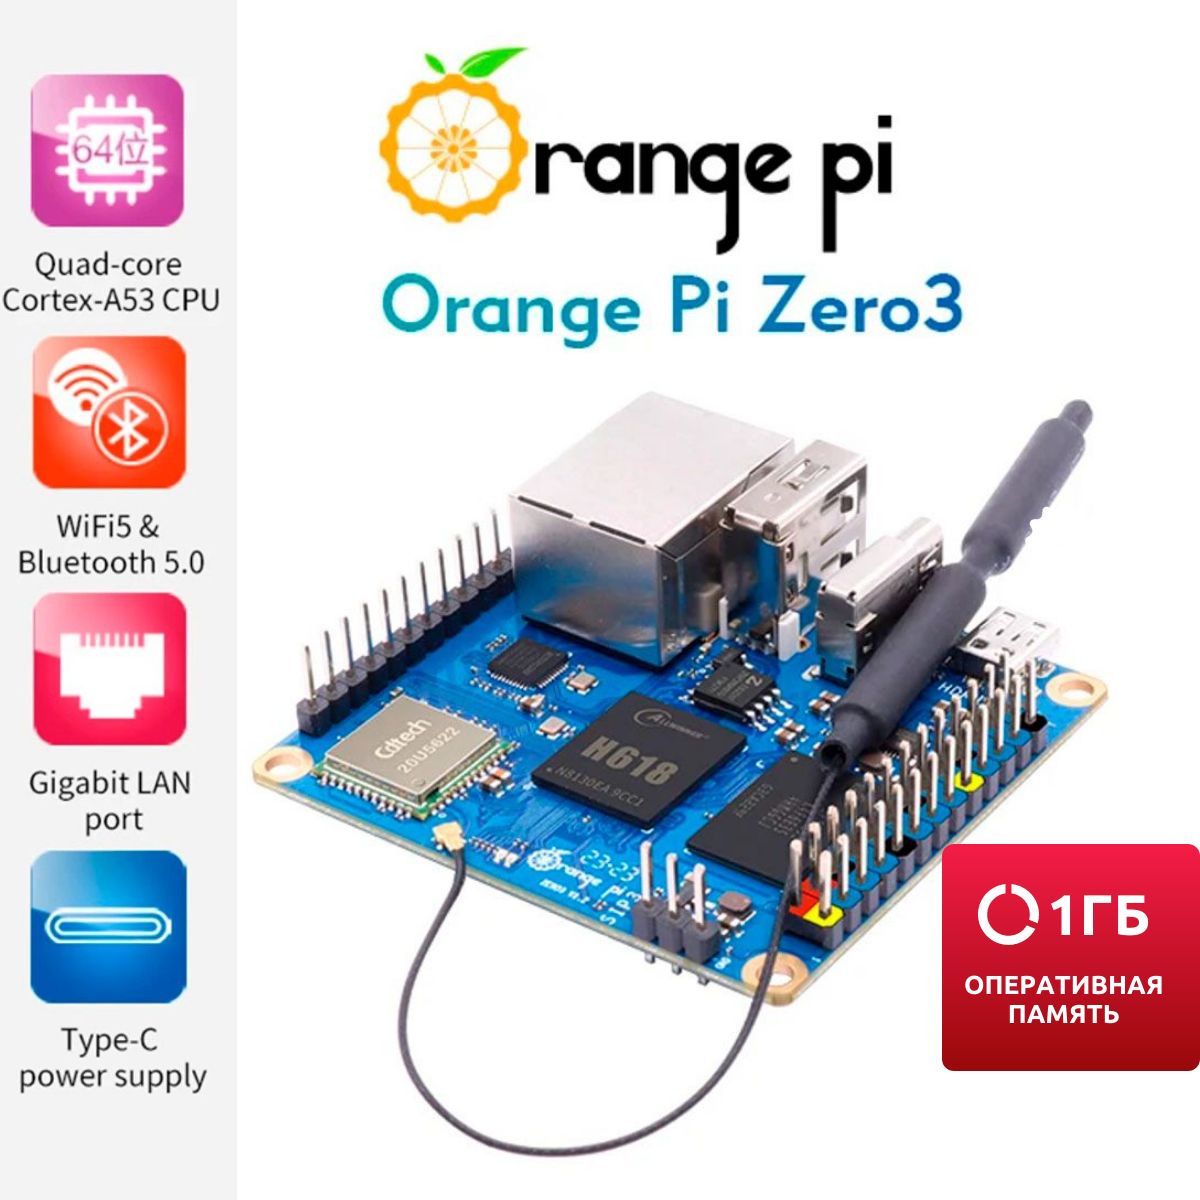 OrangePiZero3,1Гб,одноплатныйкомпьютер